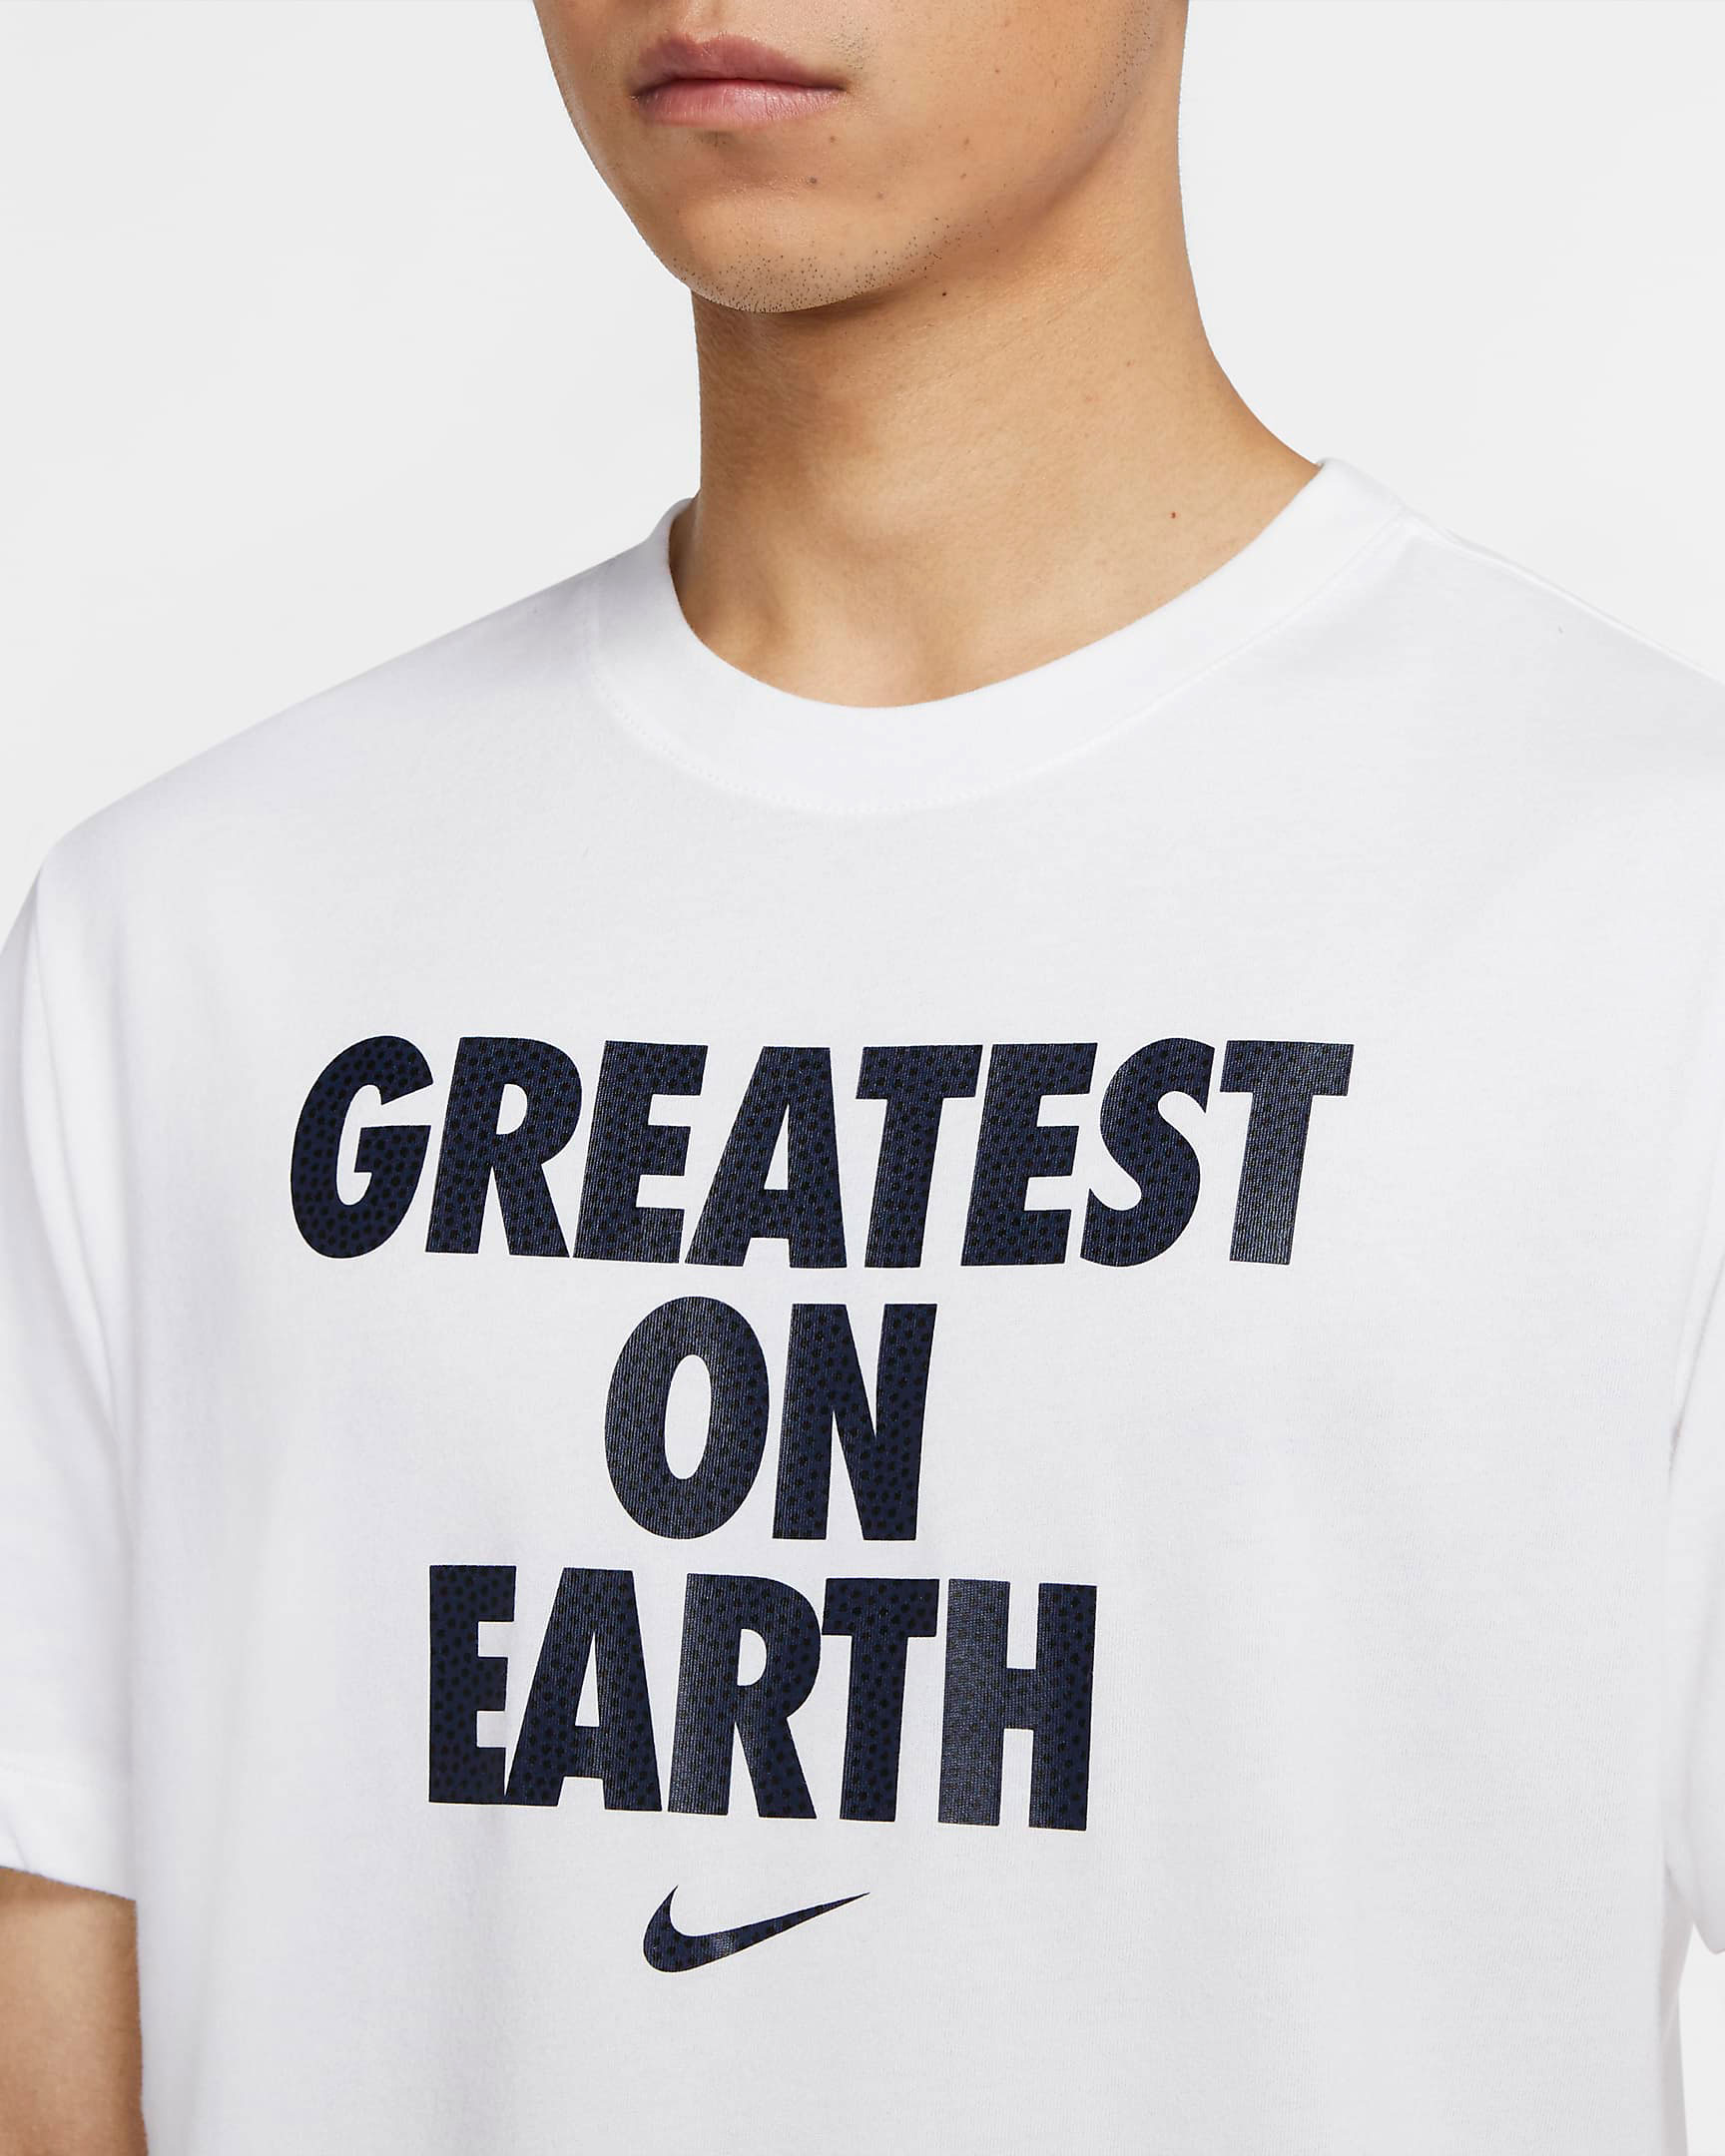 nike-basketball-greatest-on-earth-shirt